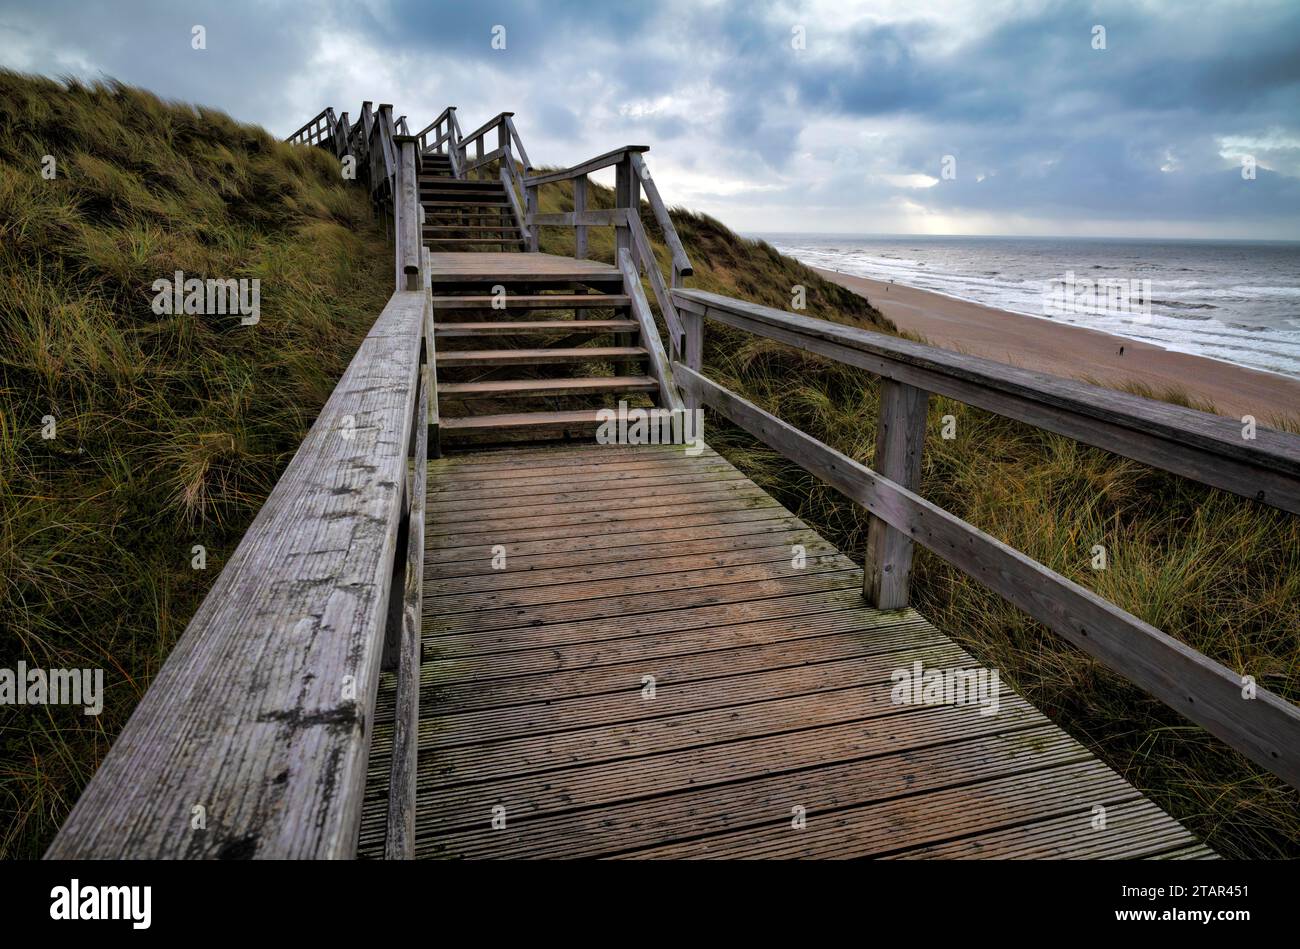 Boardwalk, wooden walkway, dune hiking trail, Wenningstedt, Braderup, North Sea island of Sylt, North Frisia, Schleswig-Holstein, Germany Stock Photo